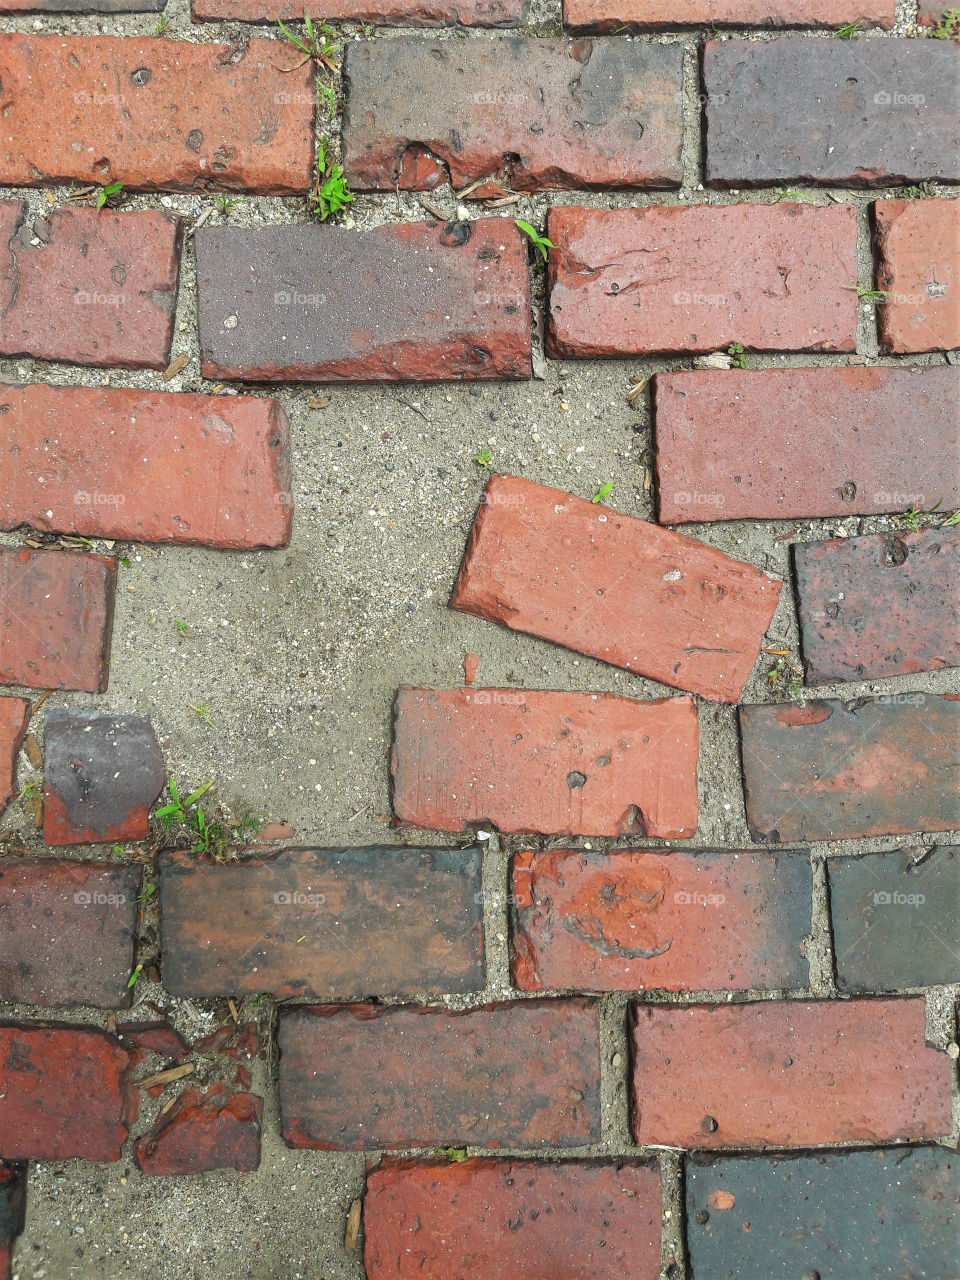 A broken patch in a brick road.